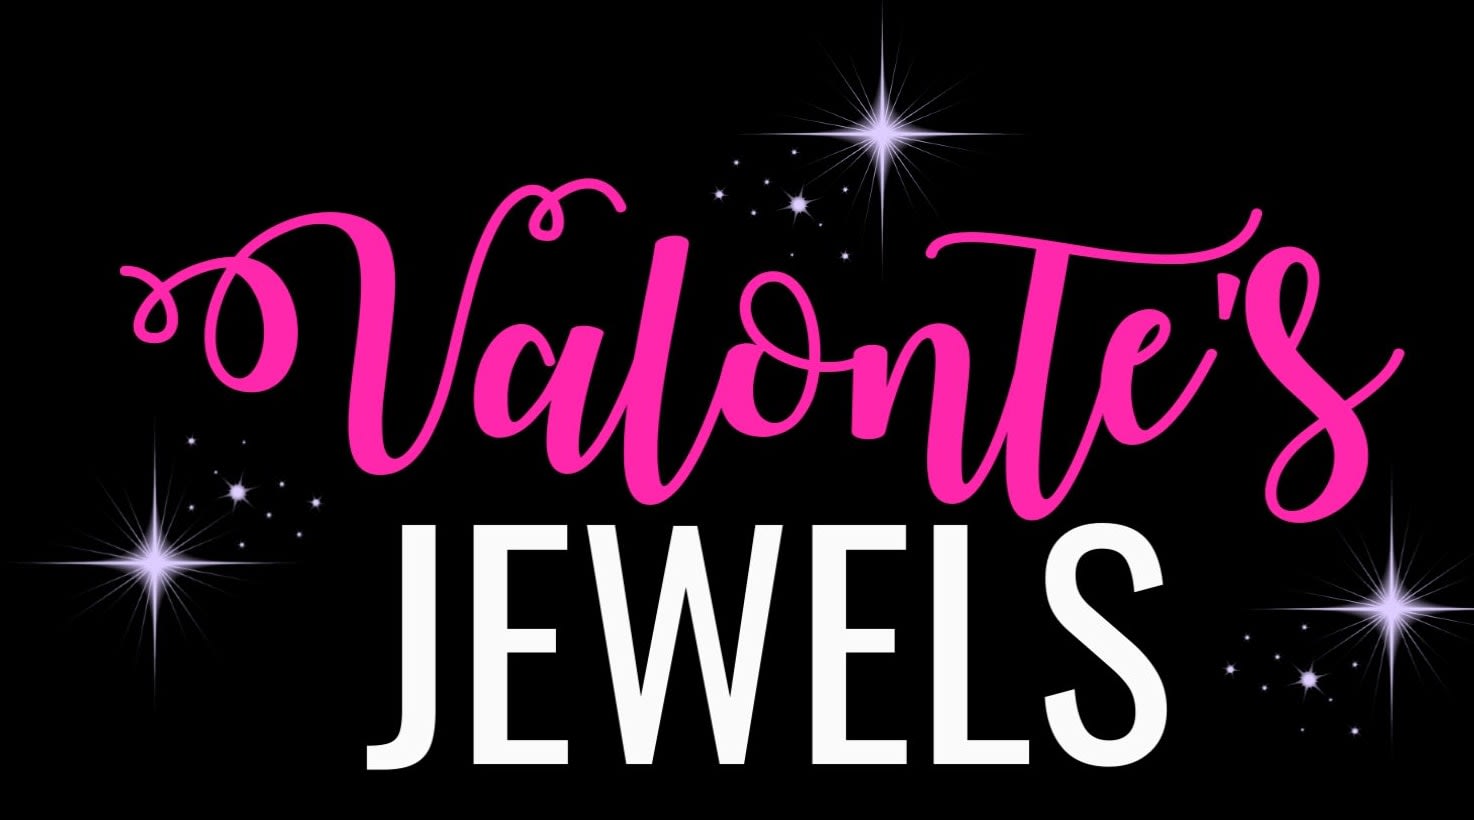 Valontes Jewels